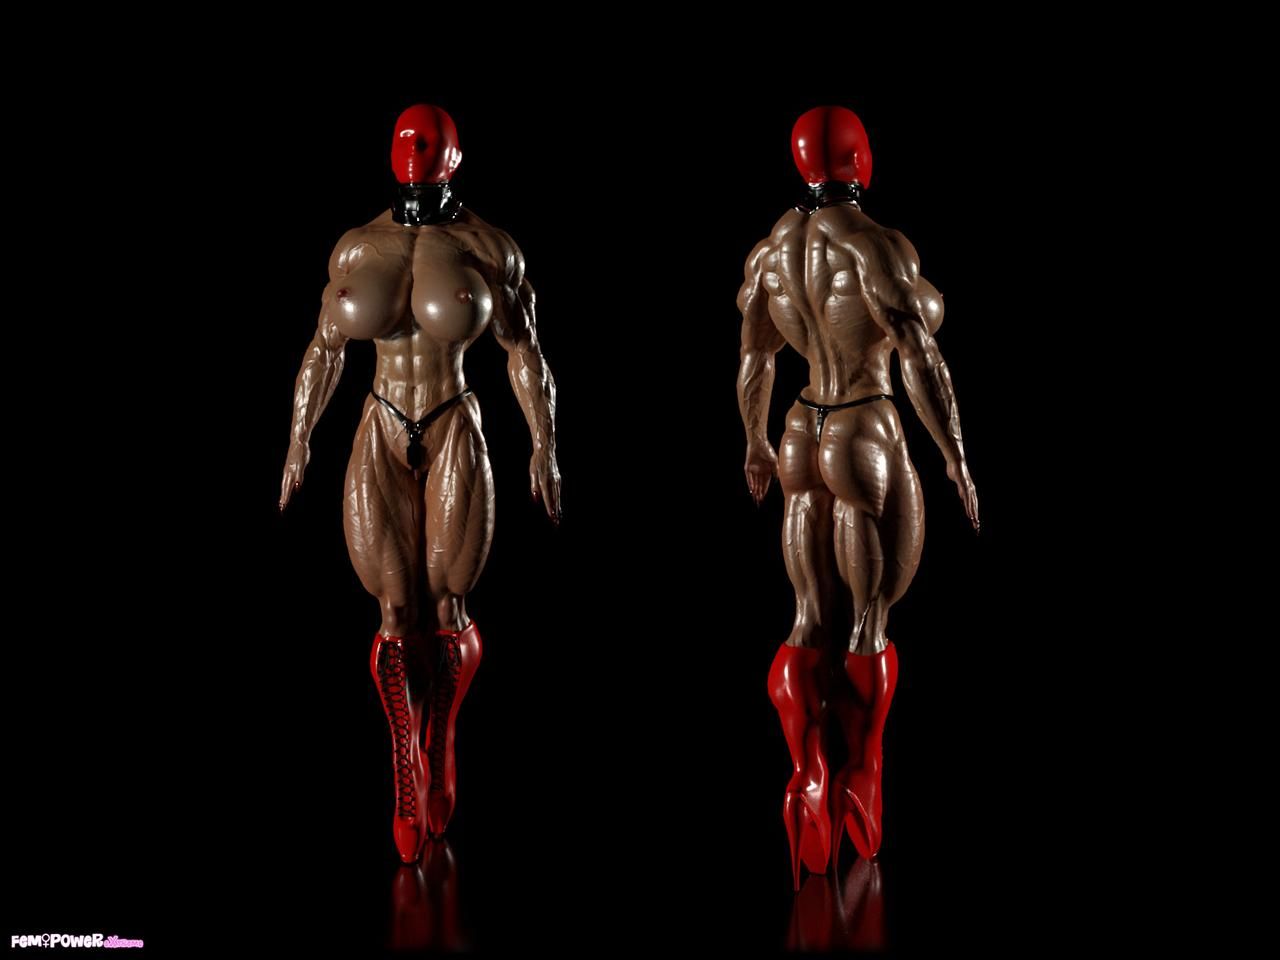 Muscle girls 3D models_ part 2 by Tigersan 23